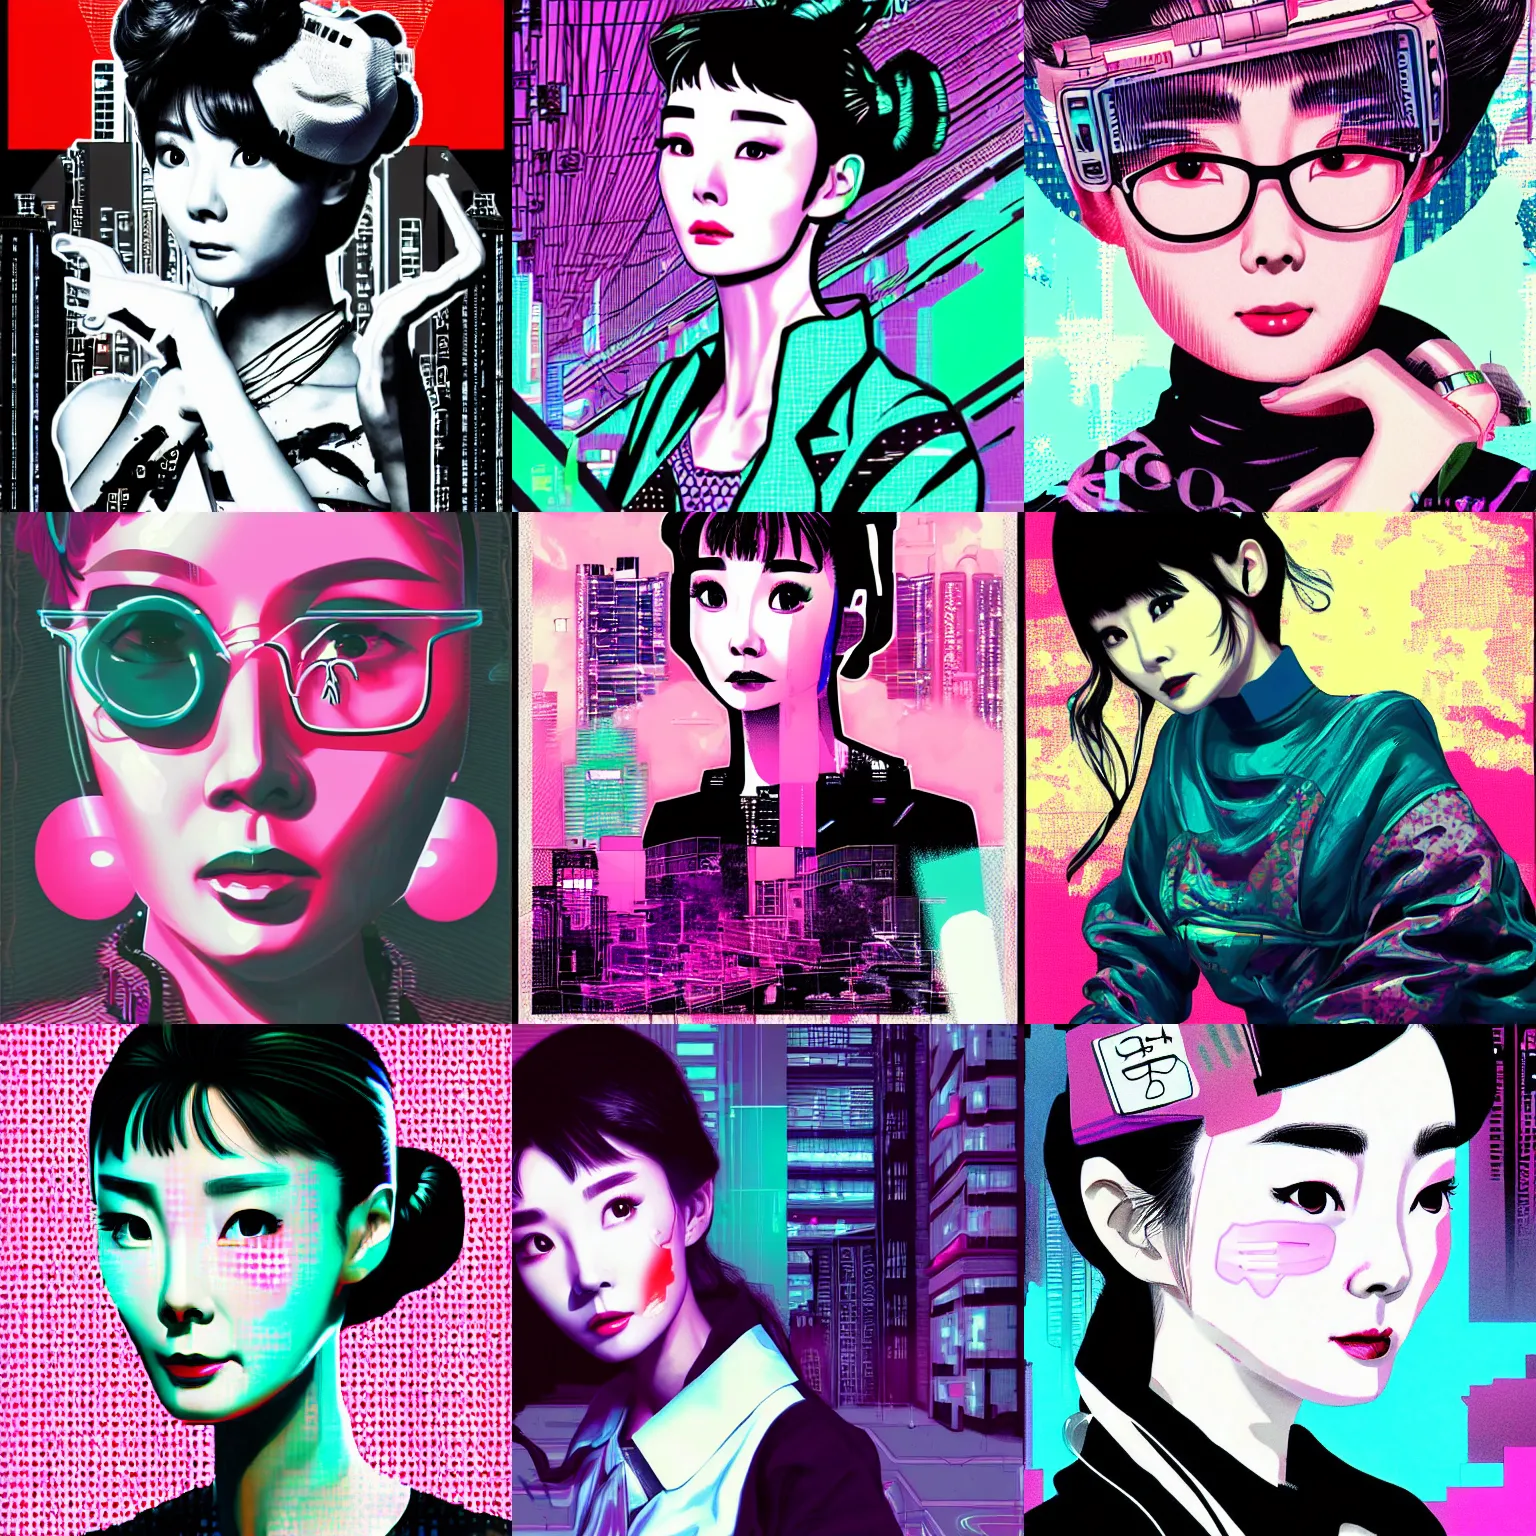 Prompt: korean audrey hepburn, detailed cyberpunk vaporwave portrait by tim doyle